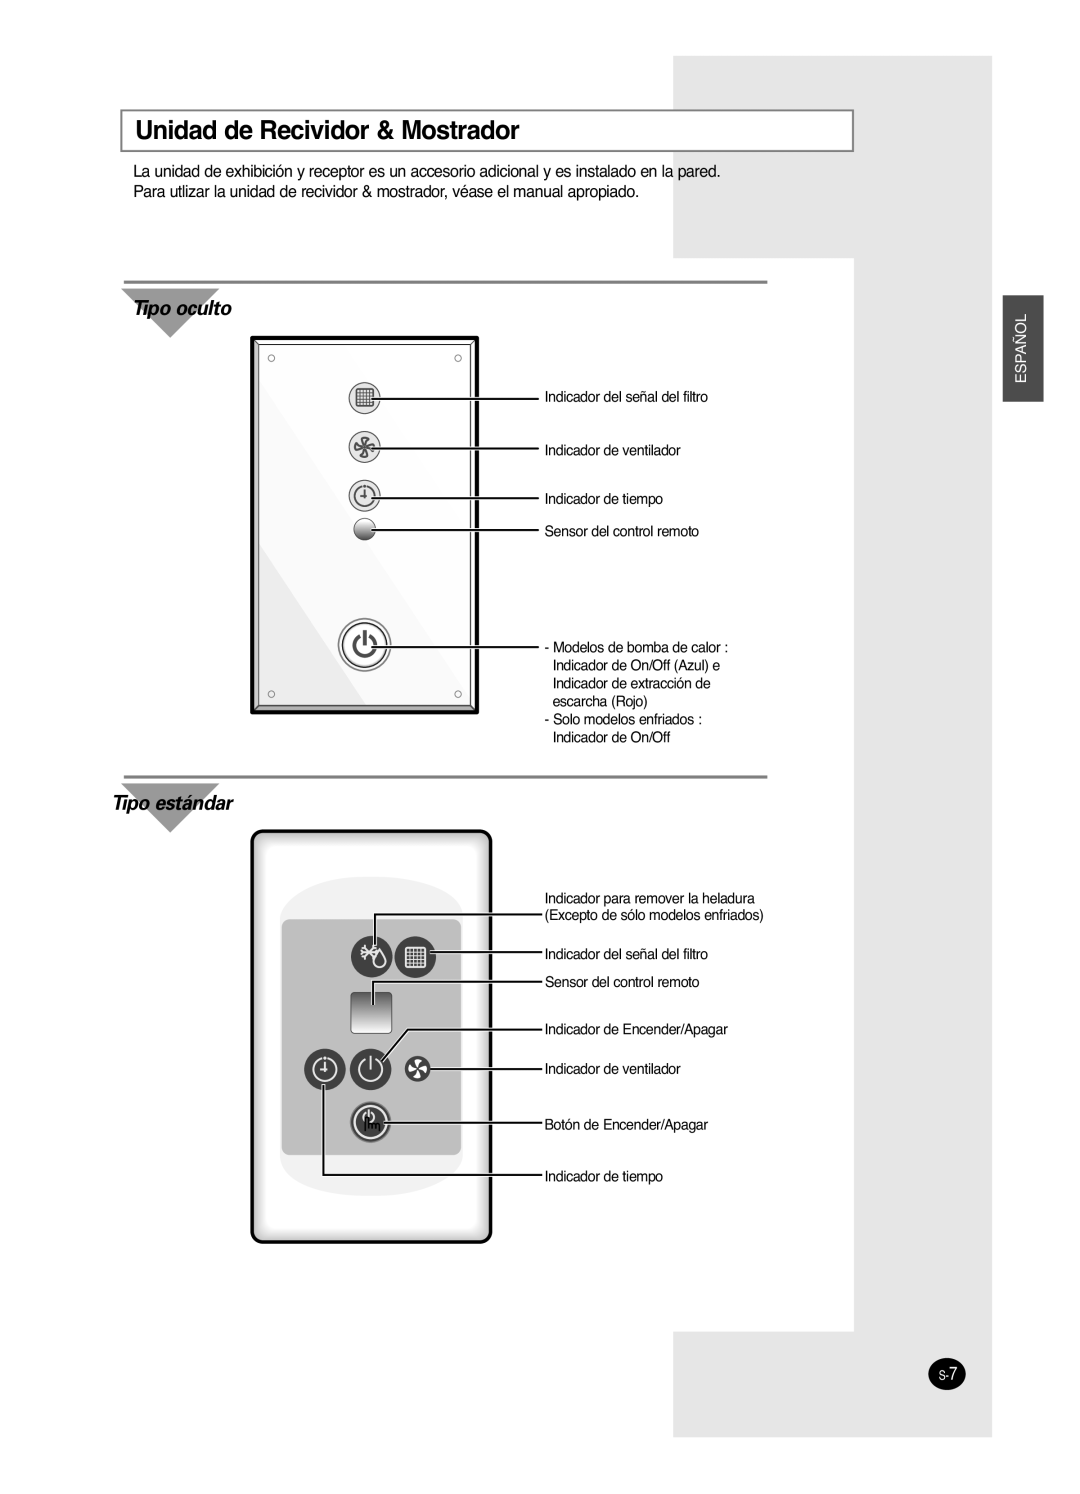 Samsung AVMHH(C) user manual Unidad de Recividor & Mostrador, Tipo oculto, Tipo estándar, Español 